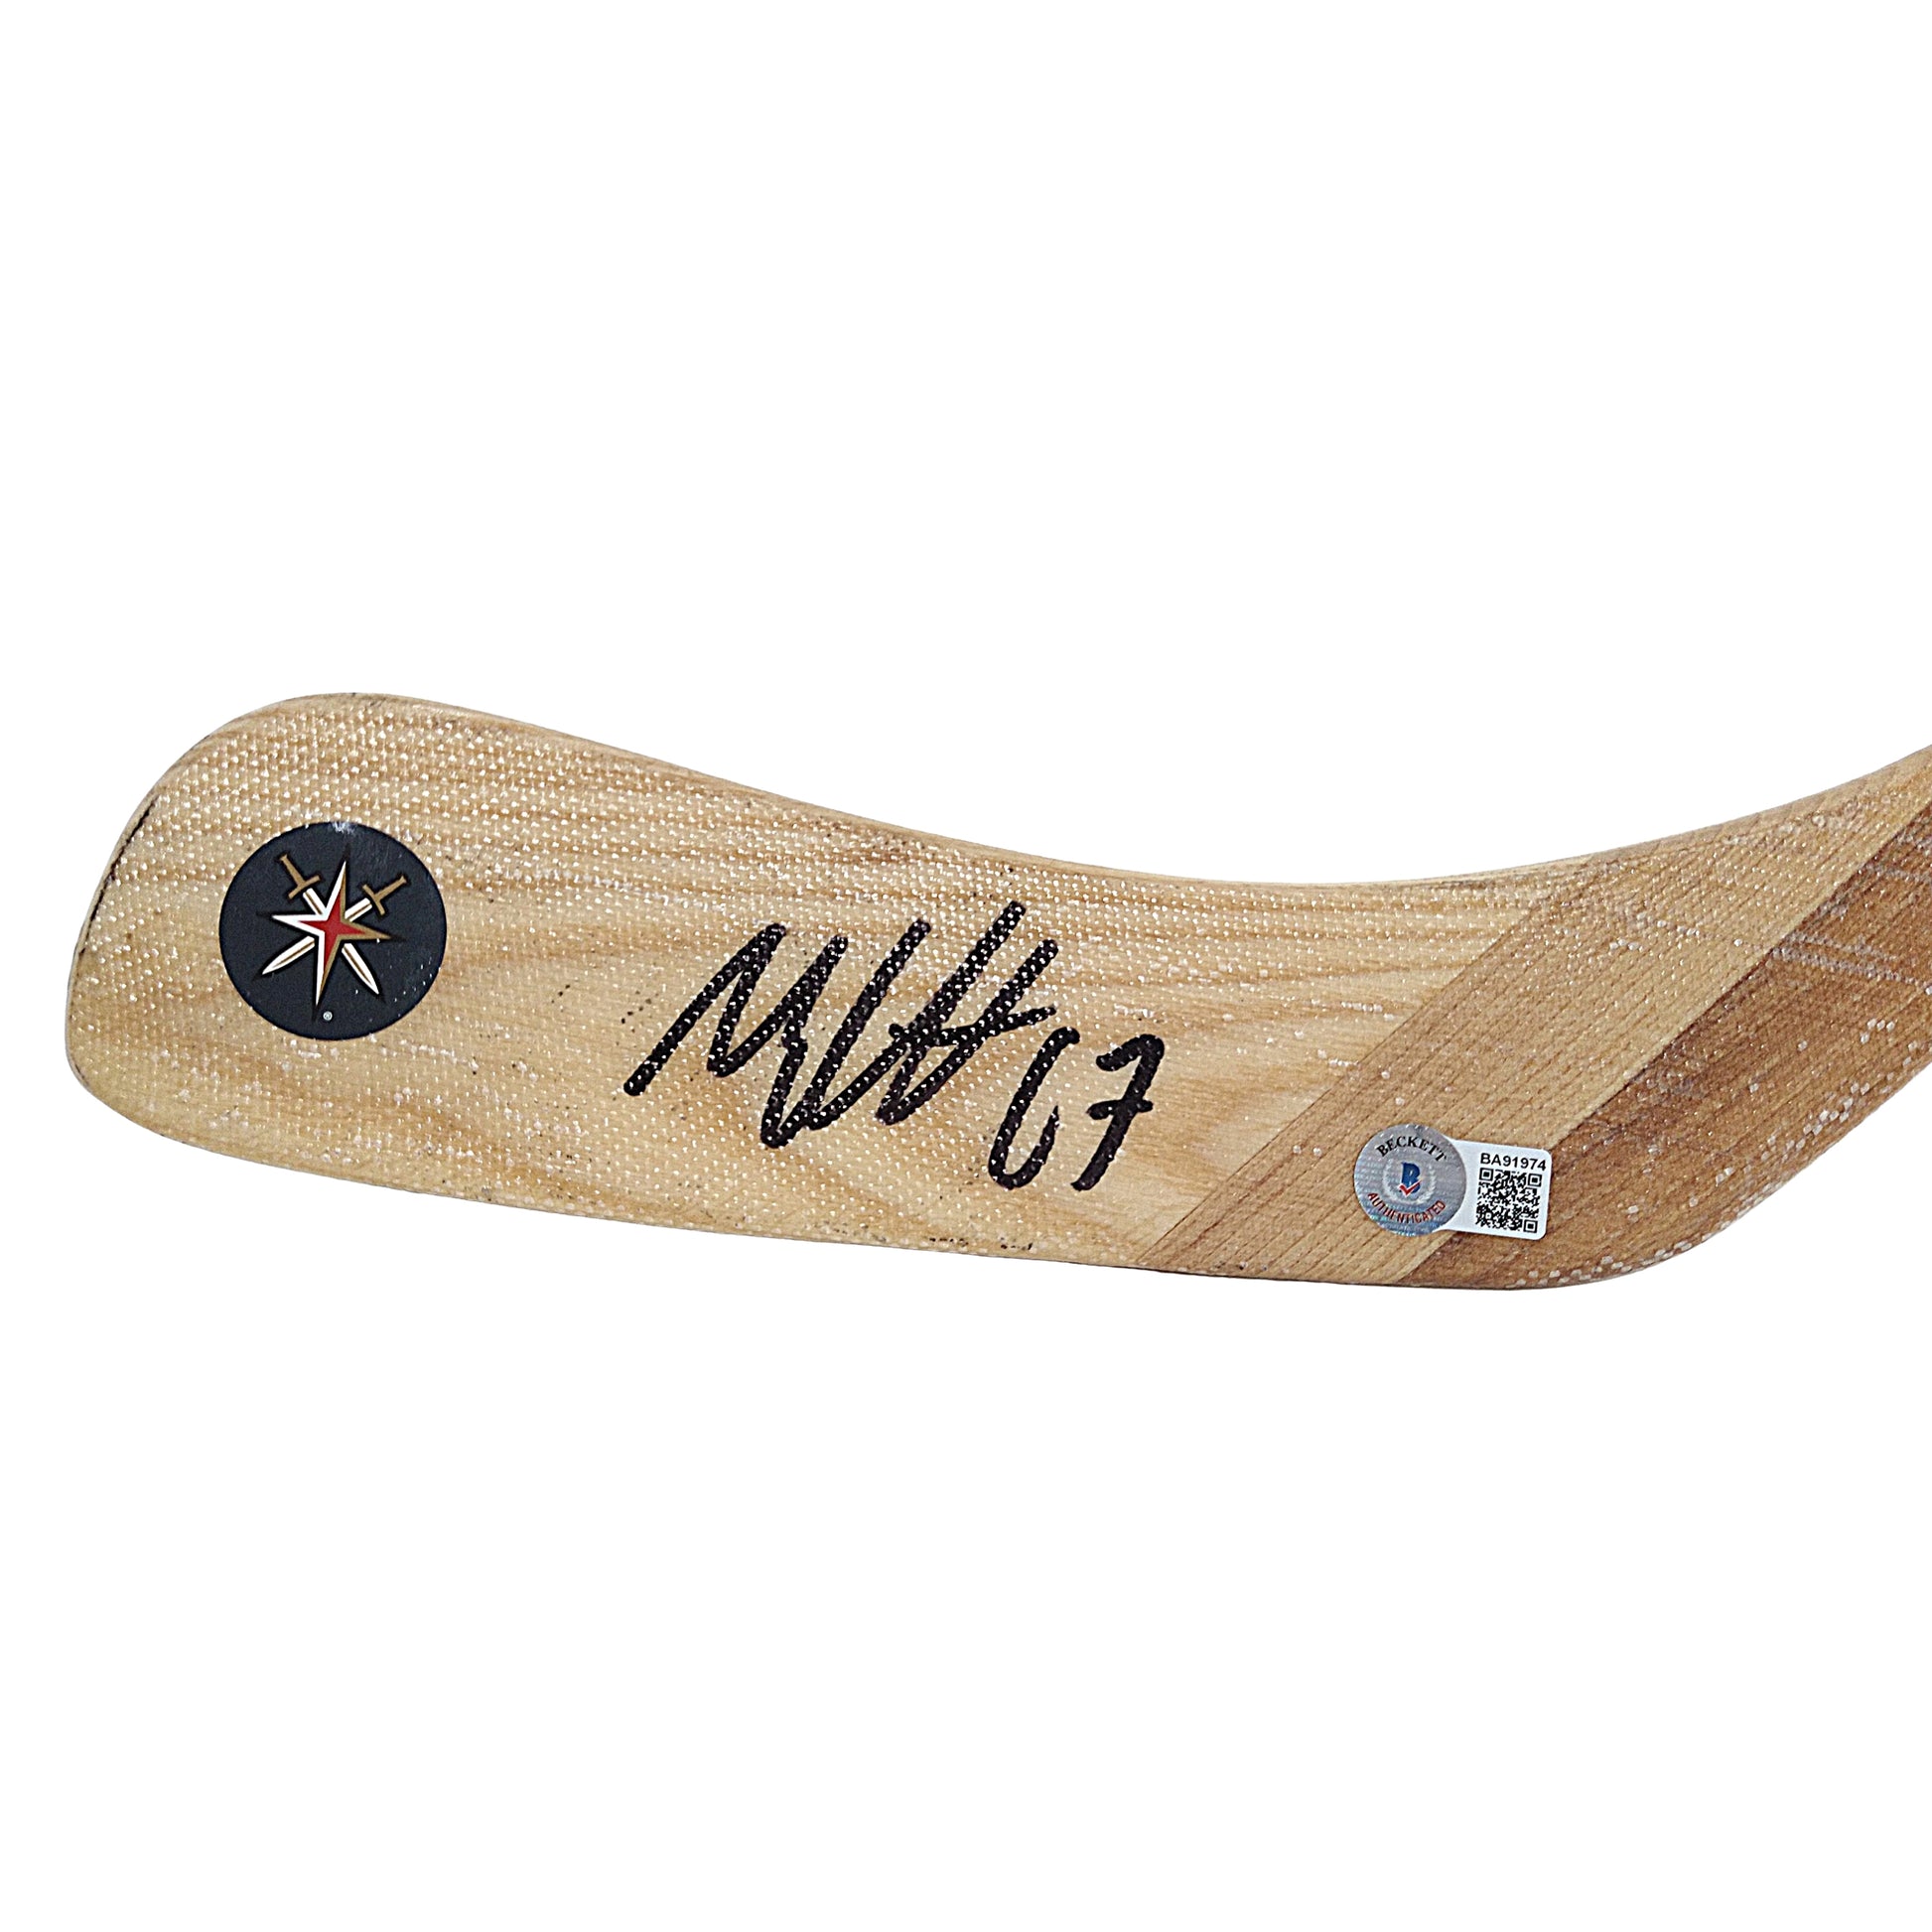 Max Pacioretty Autographed Vegas Golden Knights Hockey Stick Blade